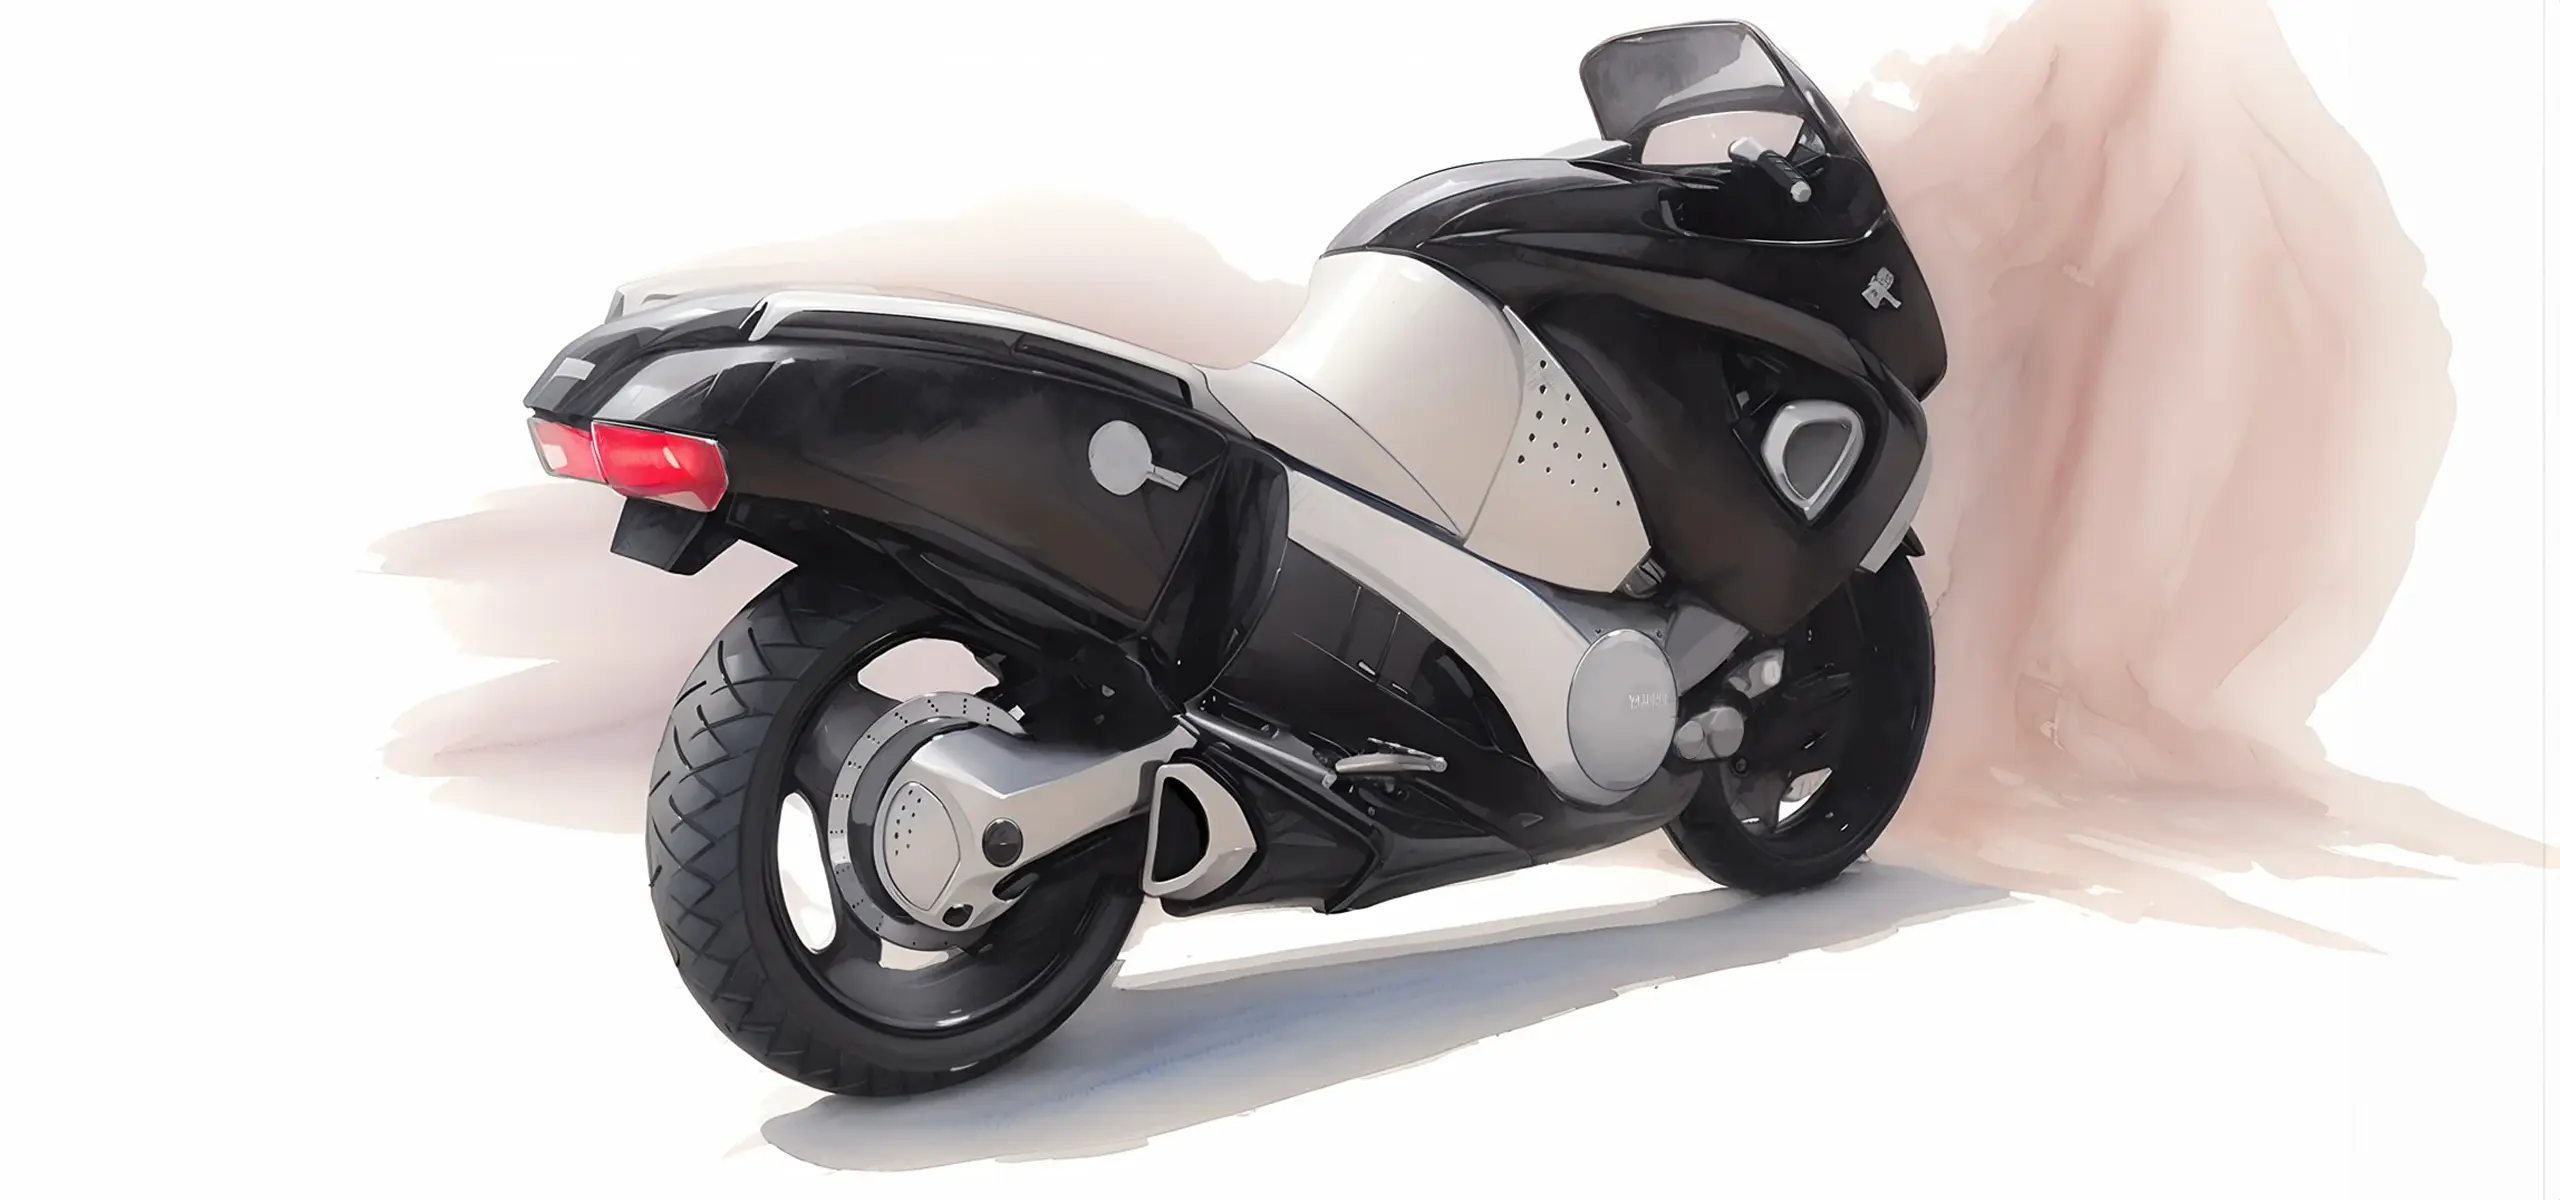 Yamaha motorcycle design render 3d